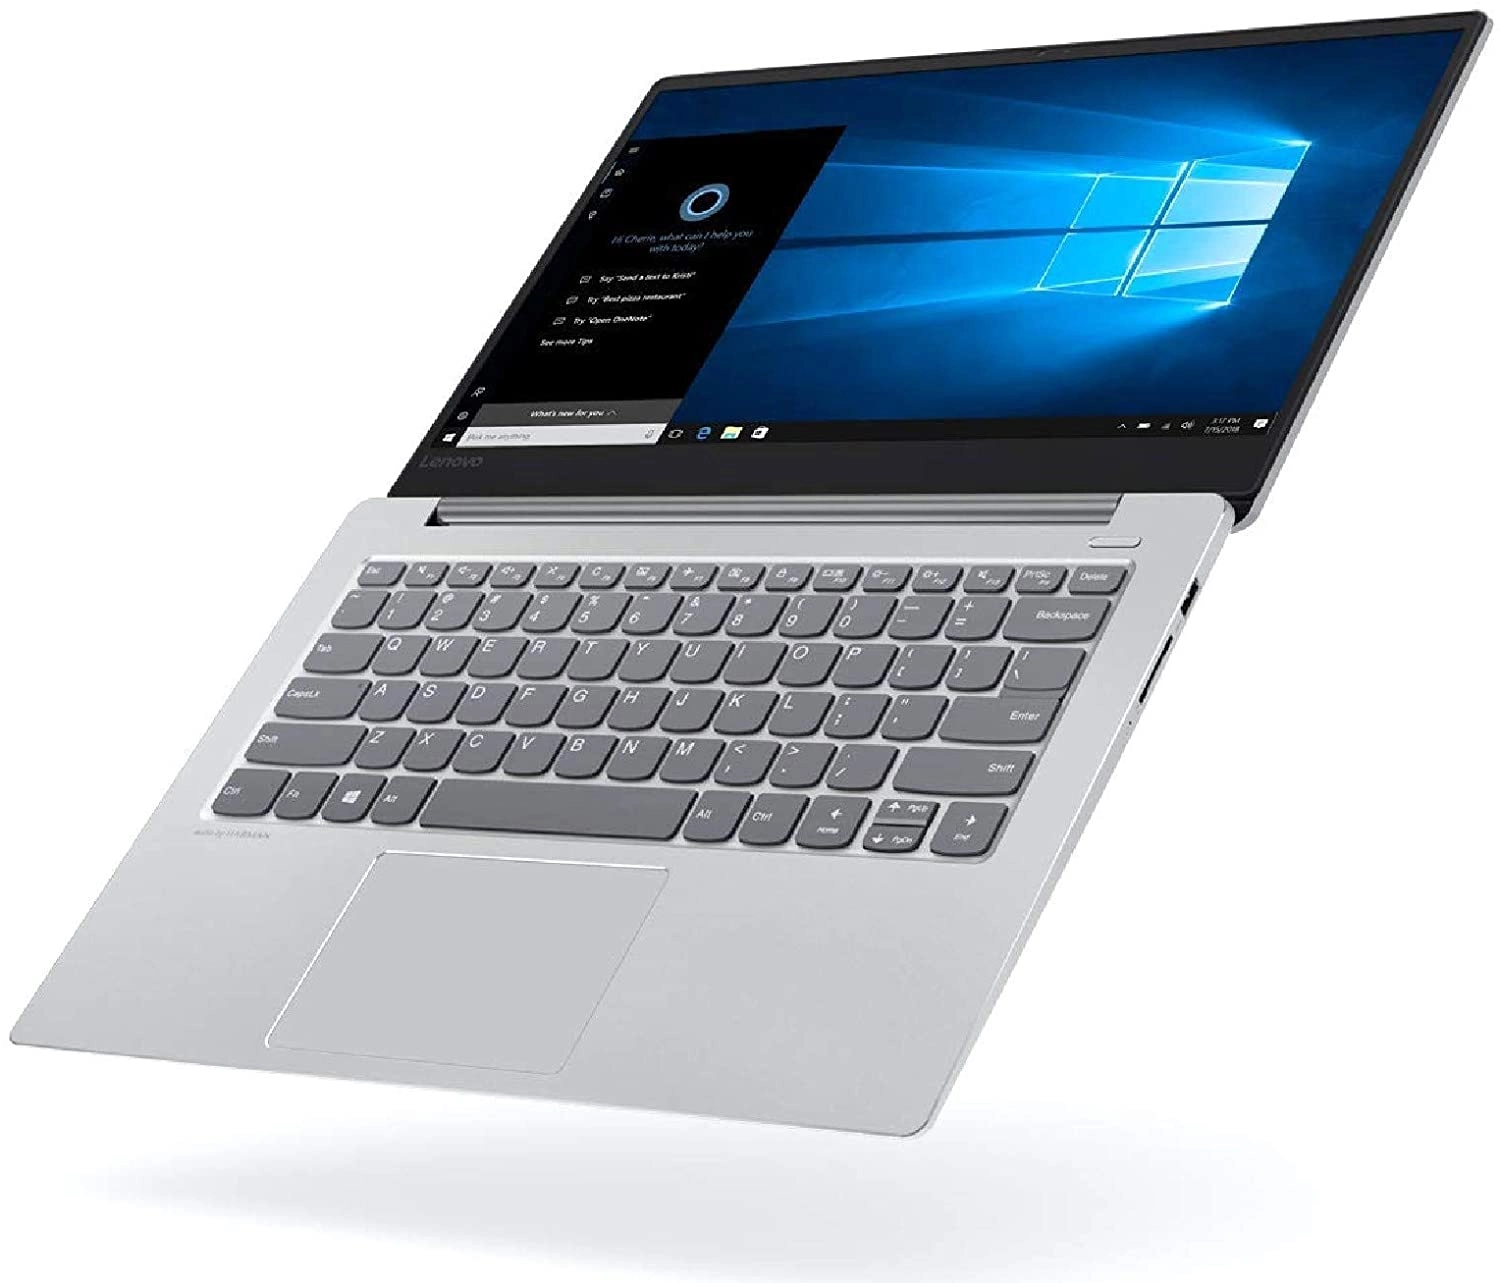 Lenovo Ideapad 530S Intel laptop image